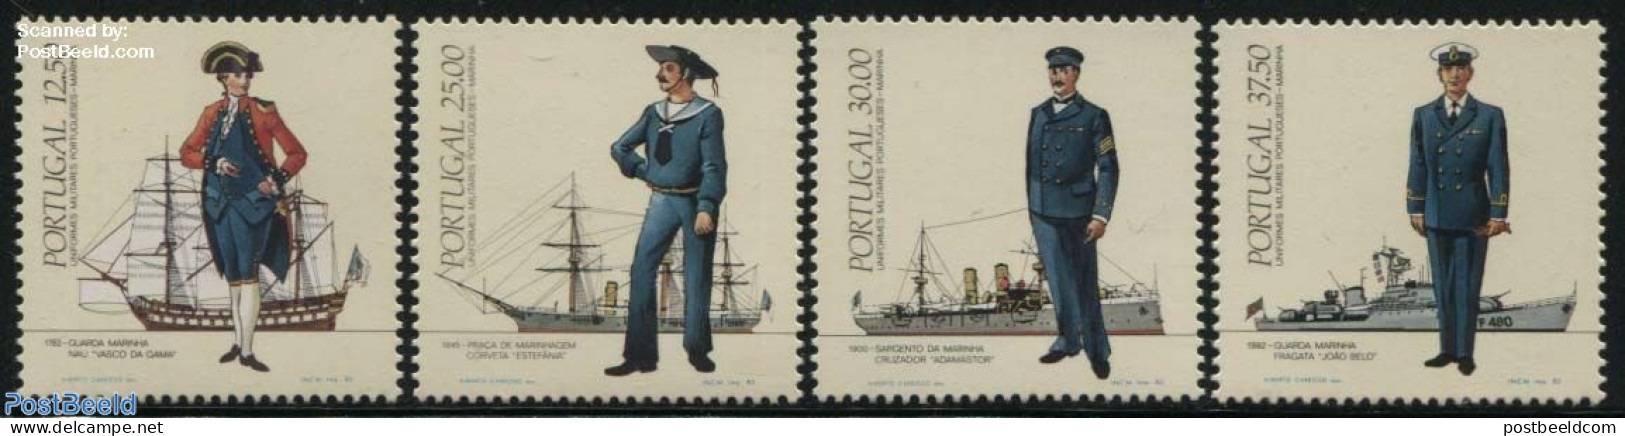 Portugal 1983 Uniforms & Ships 4v, Mint NH, Transport - Various - Ships And Boats - Uniforms - Nuevos